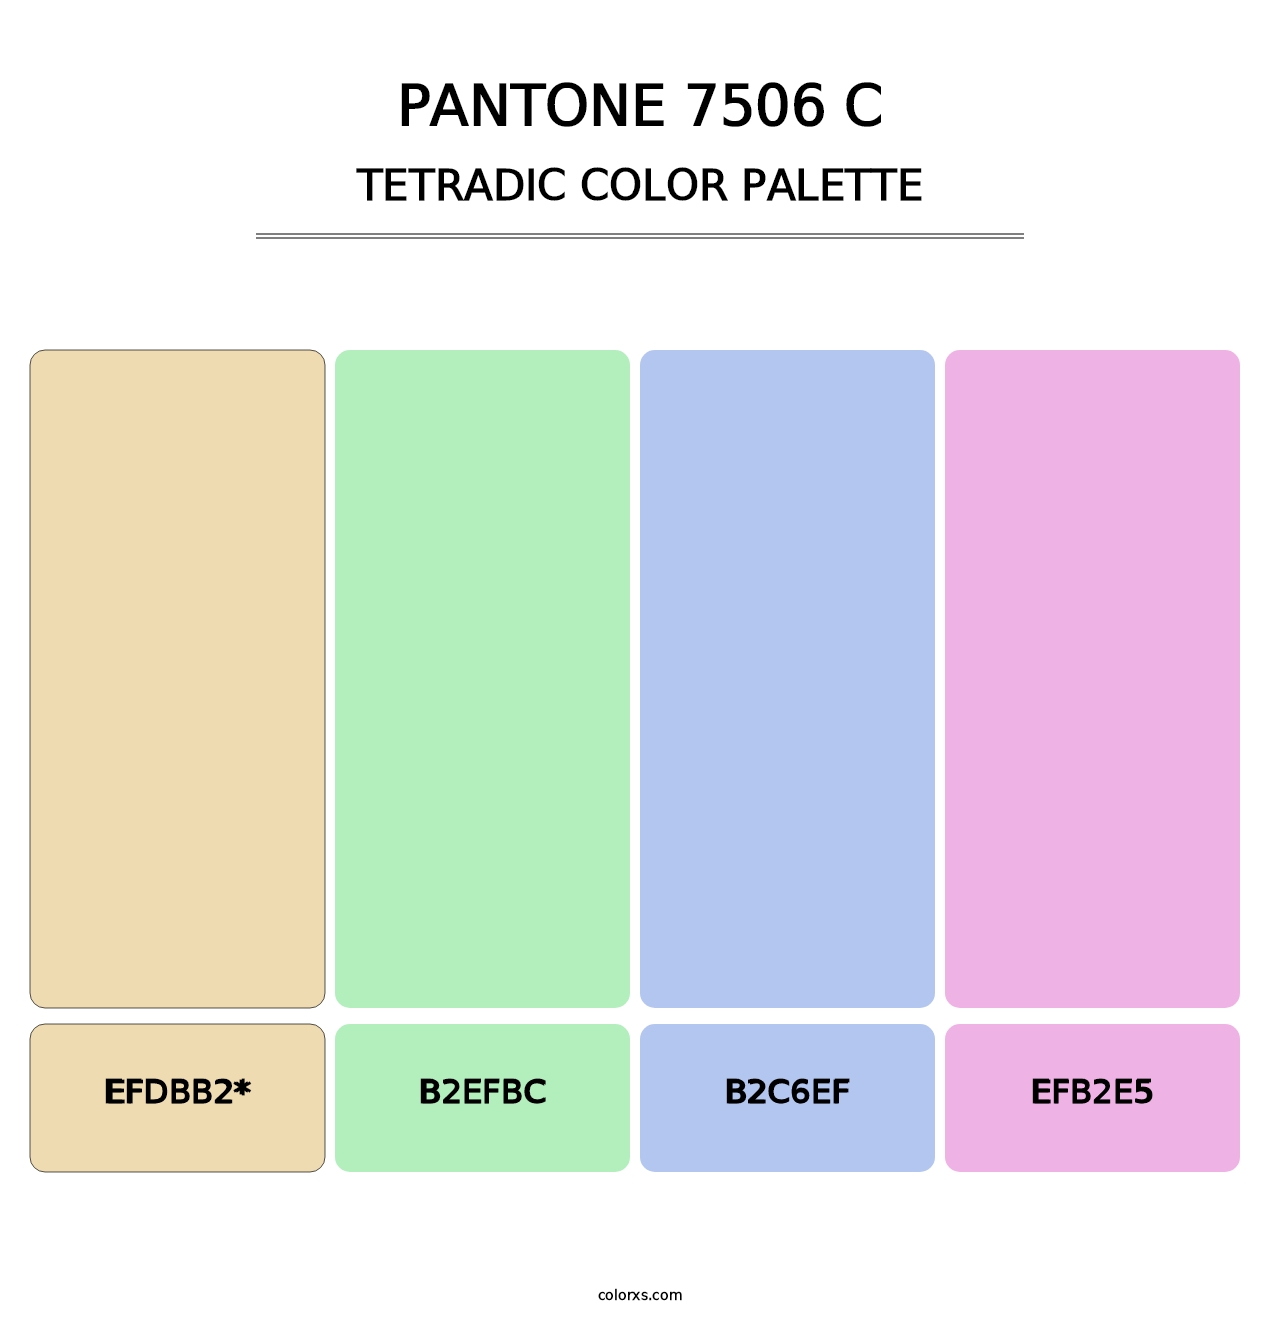 PANTONE 7506 C - Tetradic Color Palette